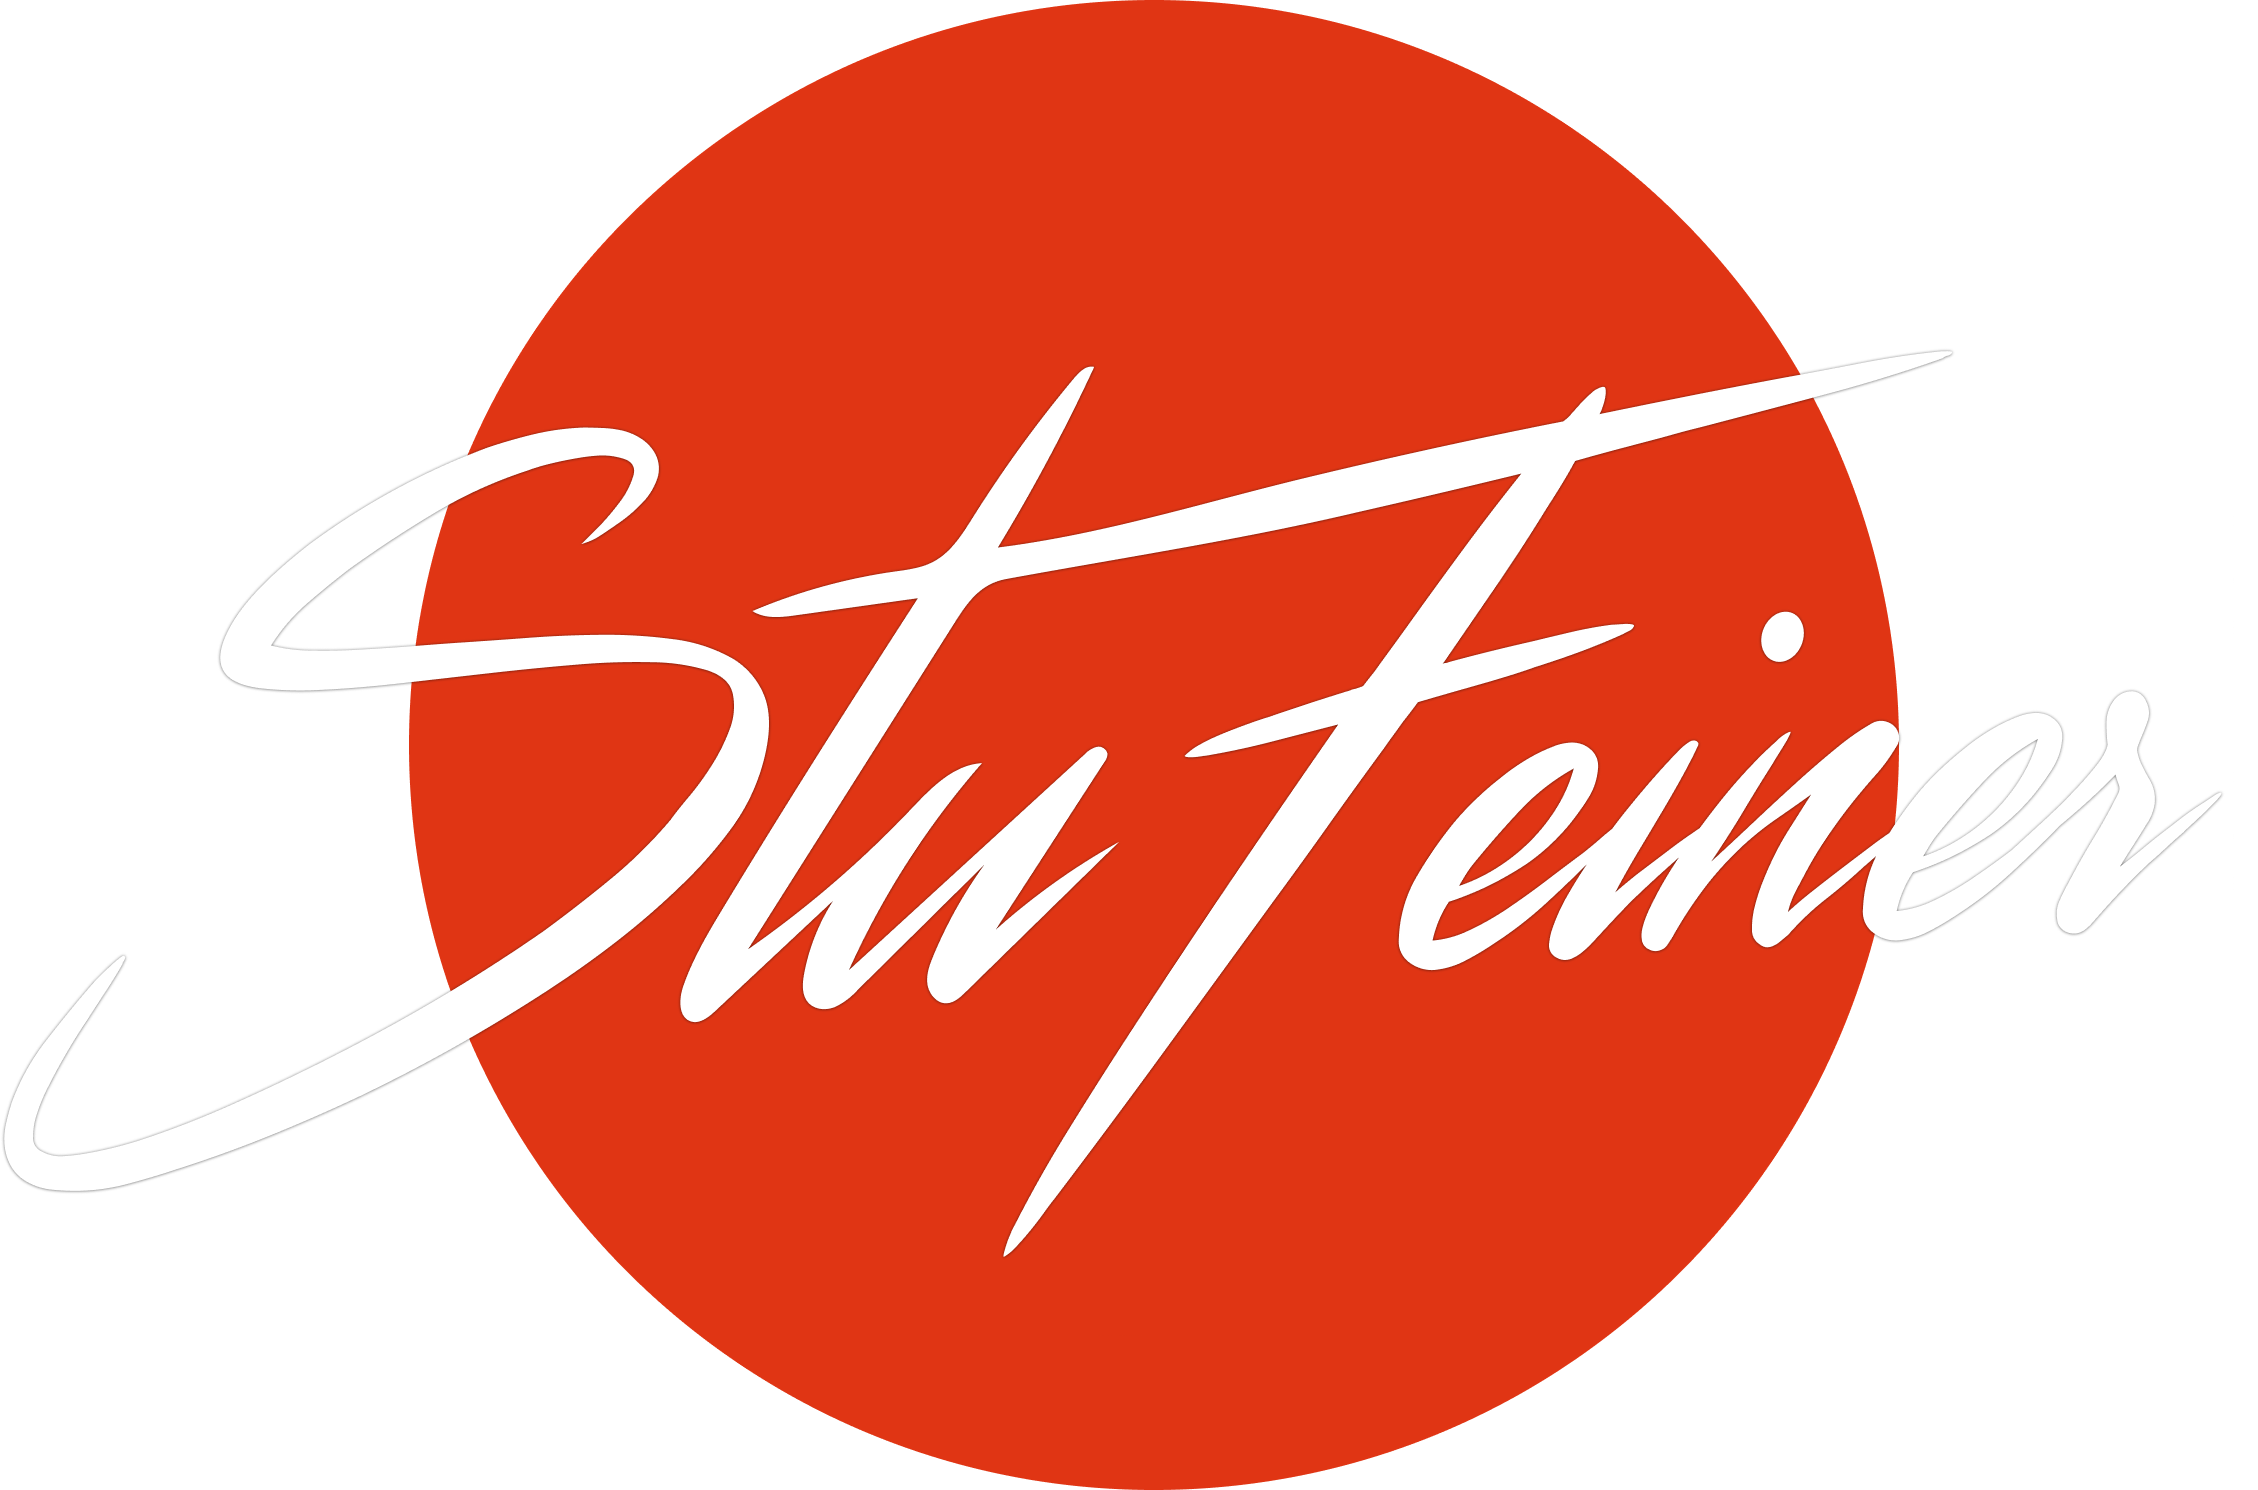 Stu Feiner